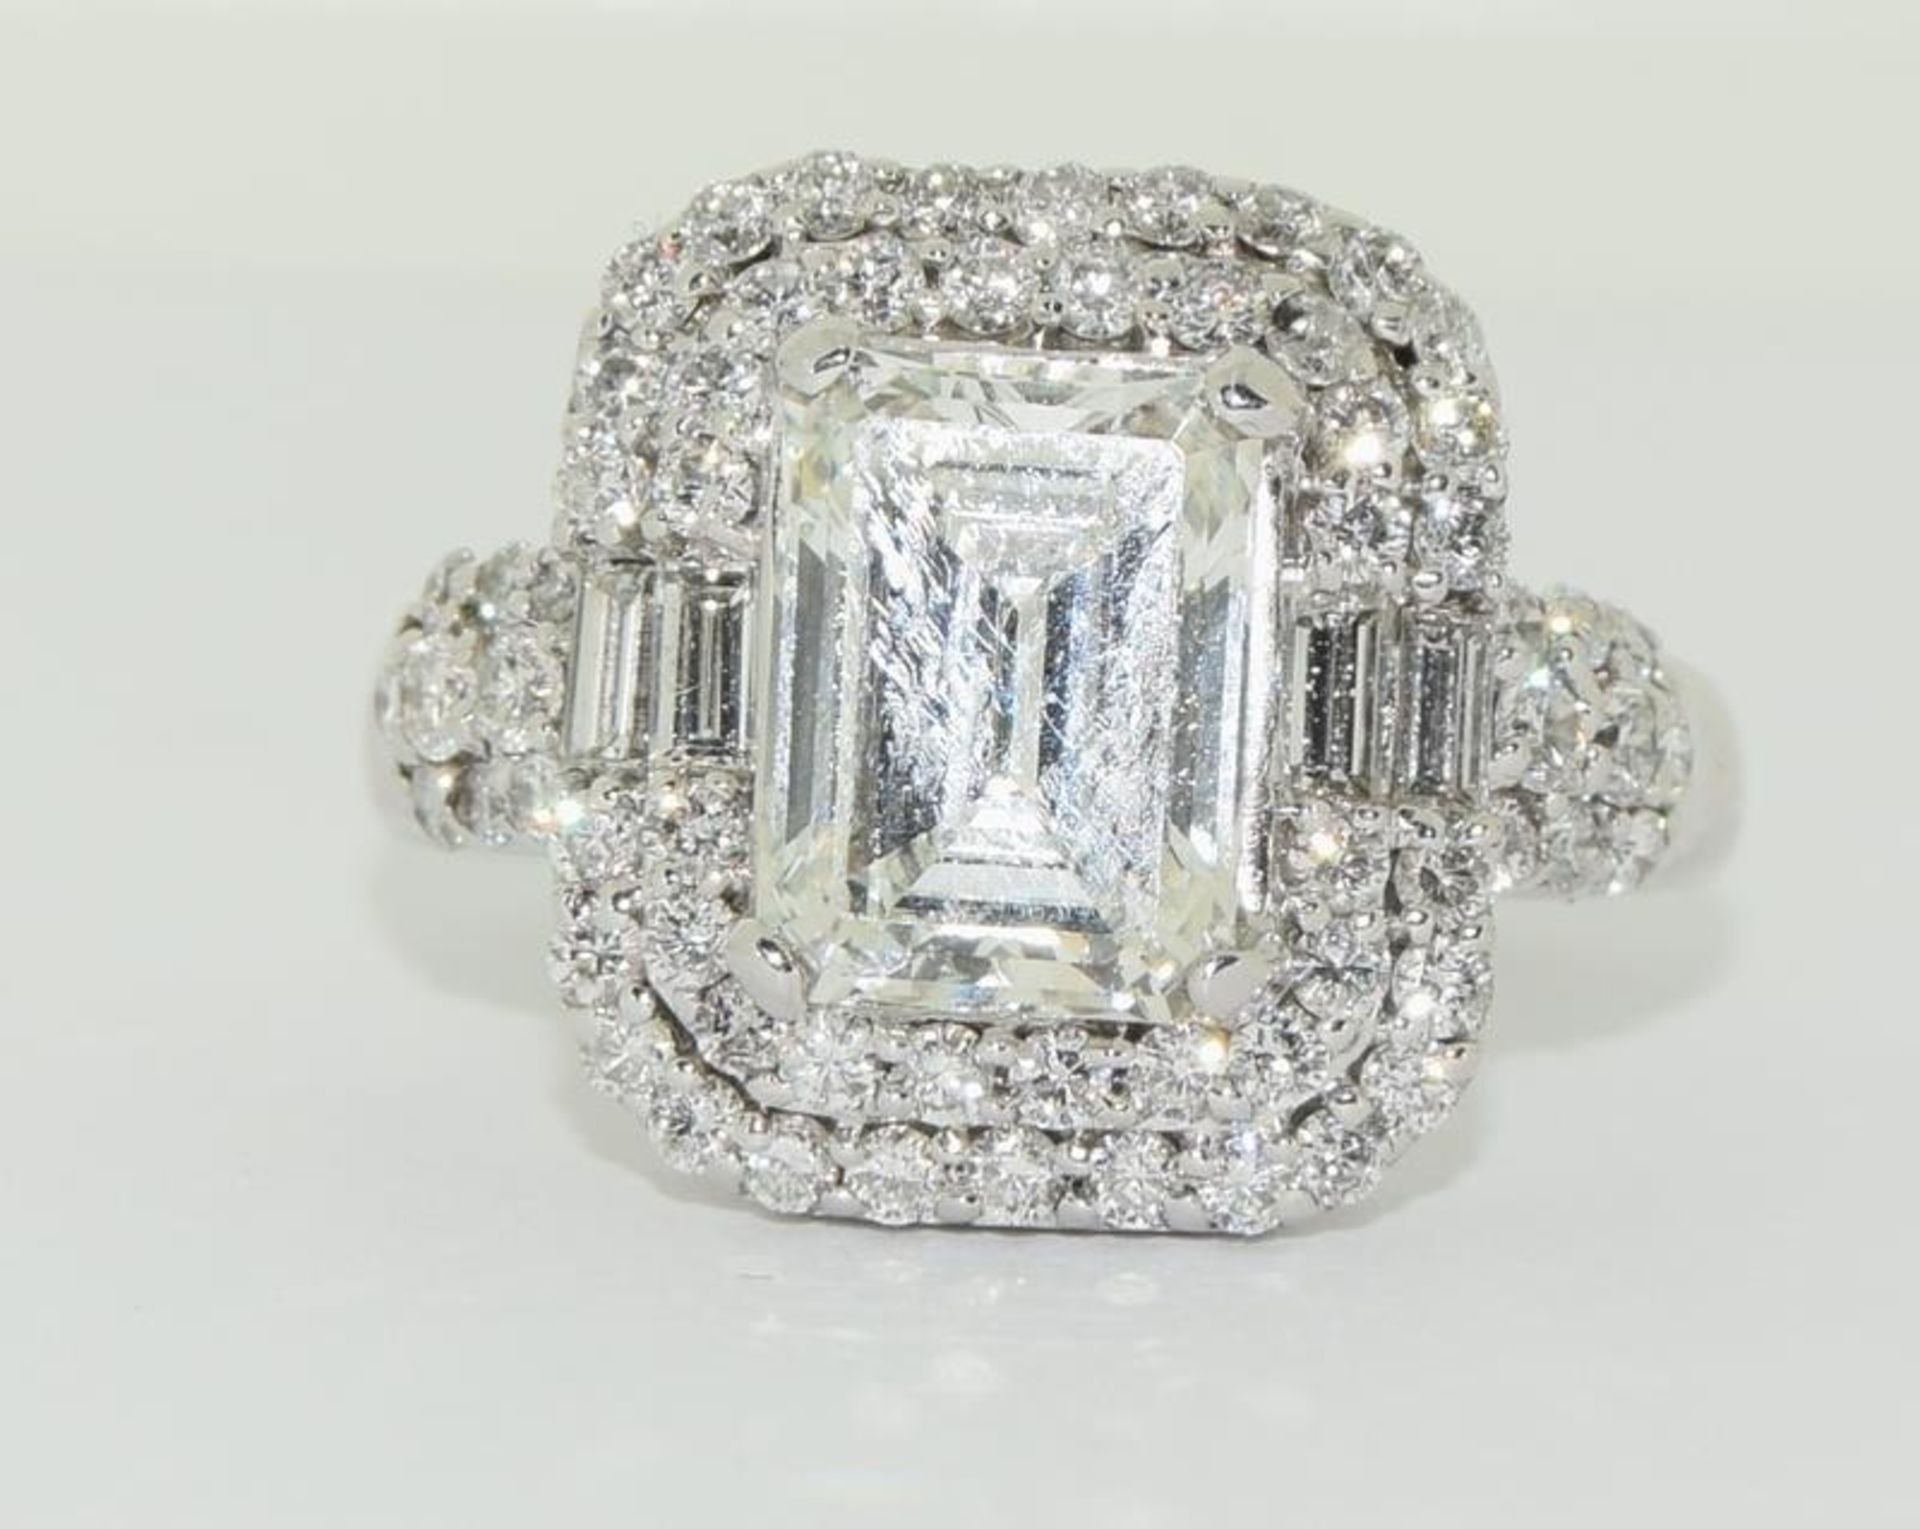 18ct white gold ladies Emerald cut center stone diamond ring with diamond halo surround of 68 - Image 7 of 9